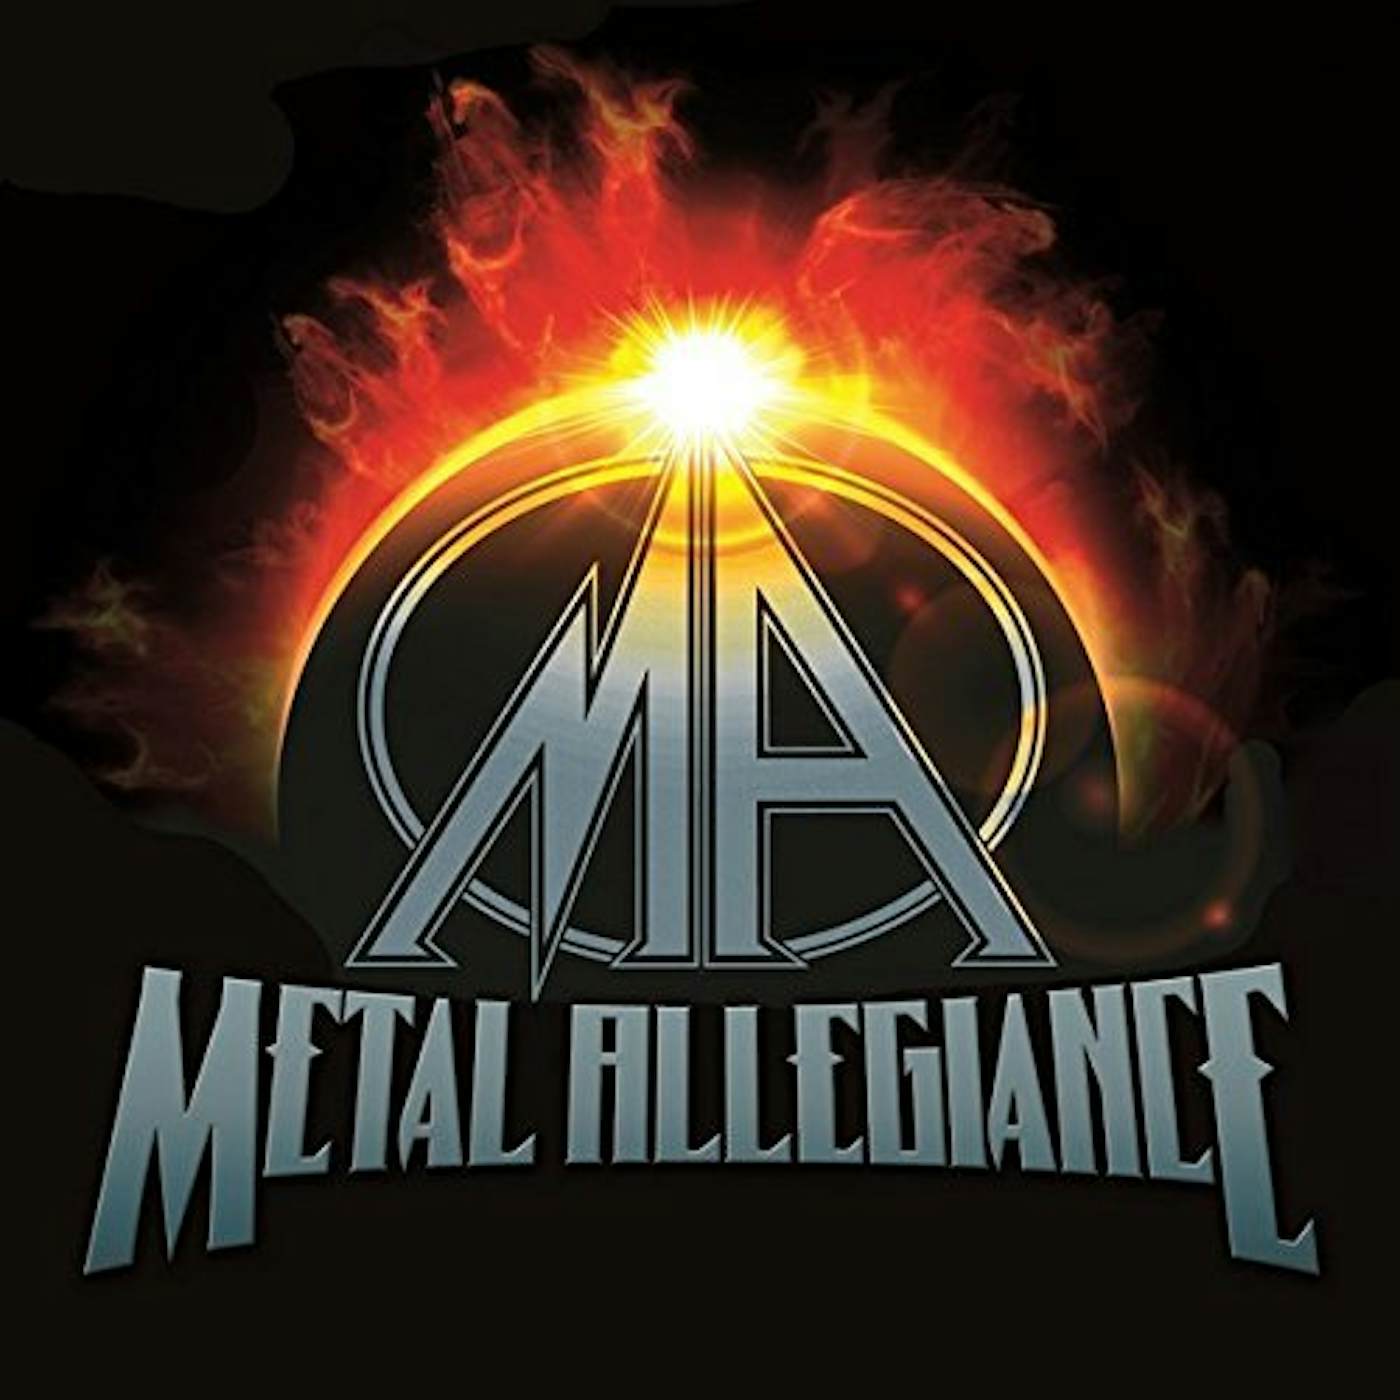 Metal Allegiance Vinyl Record